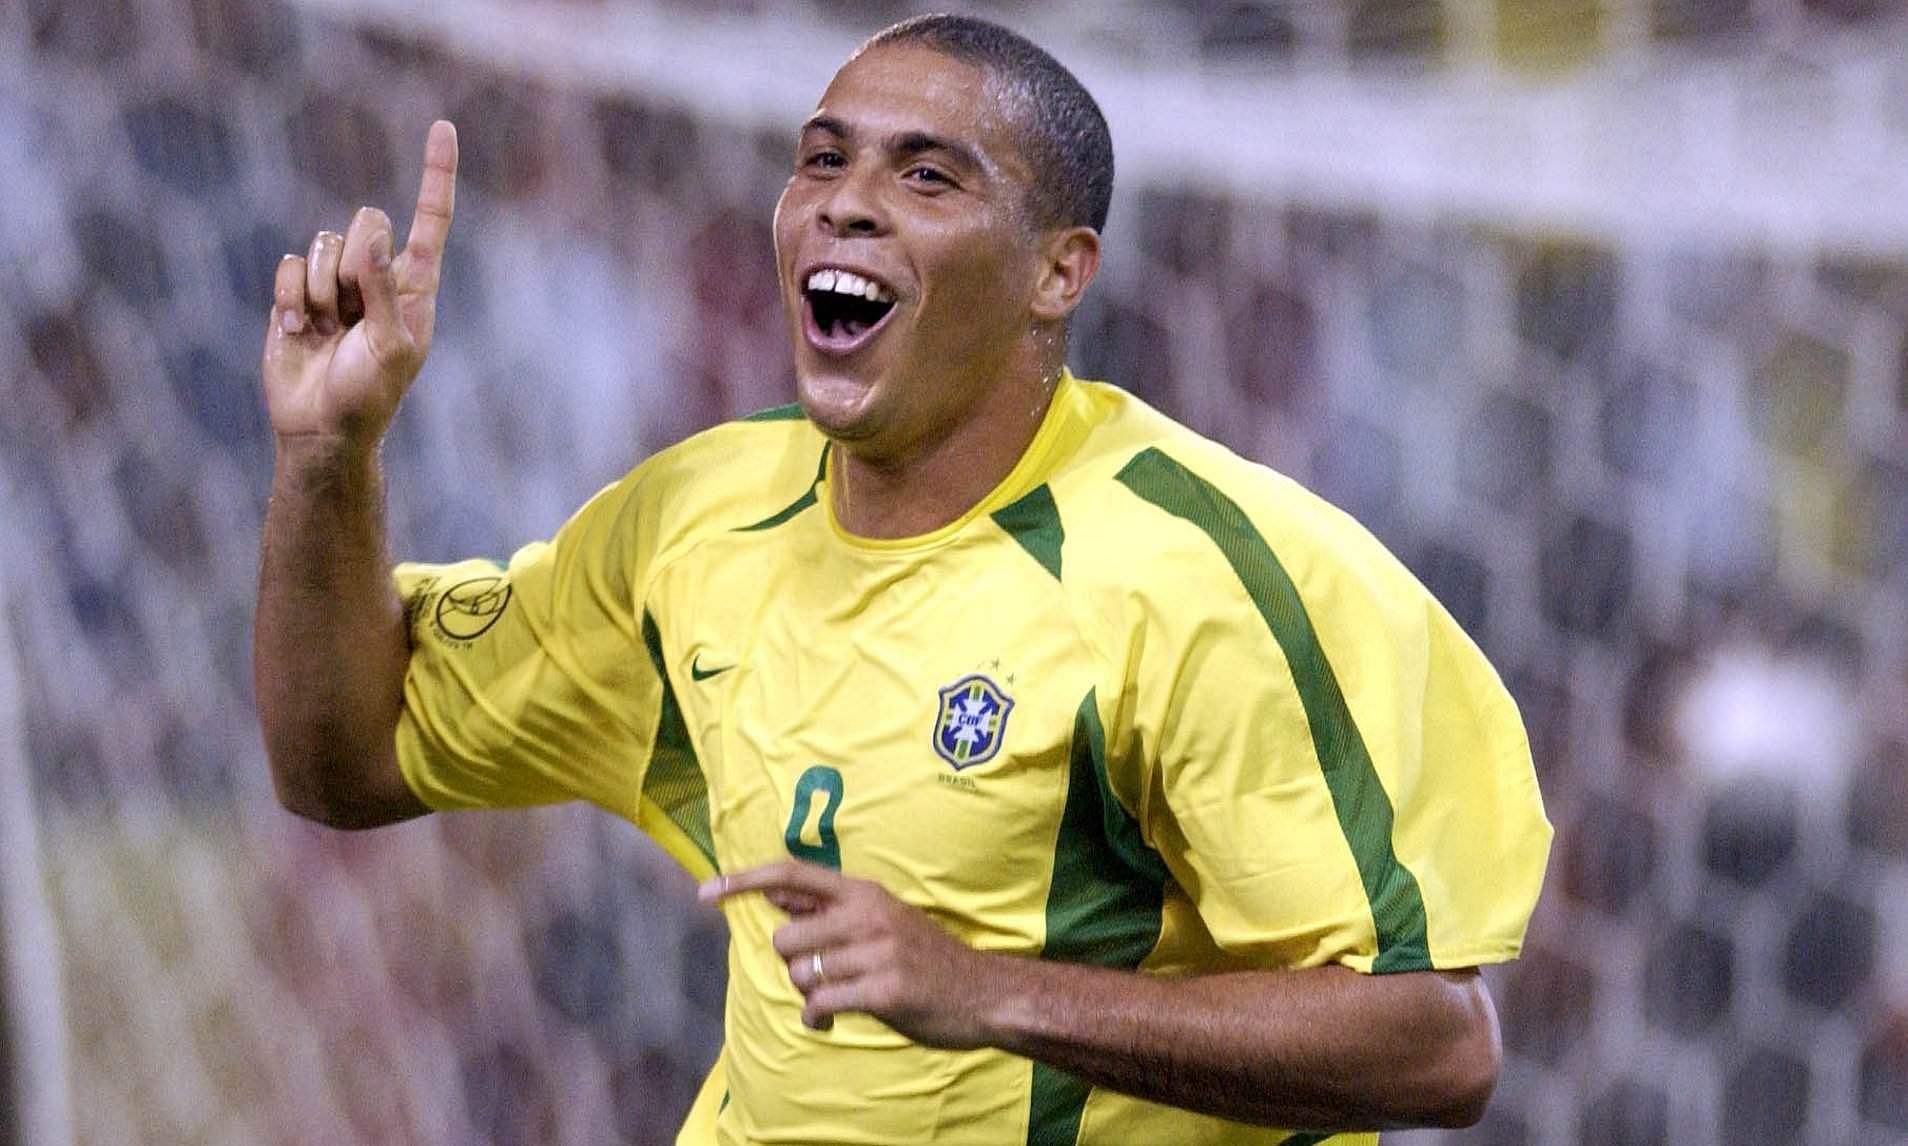 Ronaldo Nazario is football's all-time greats (Image courtesy: dailymail.co.uk)